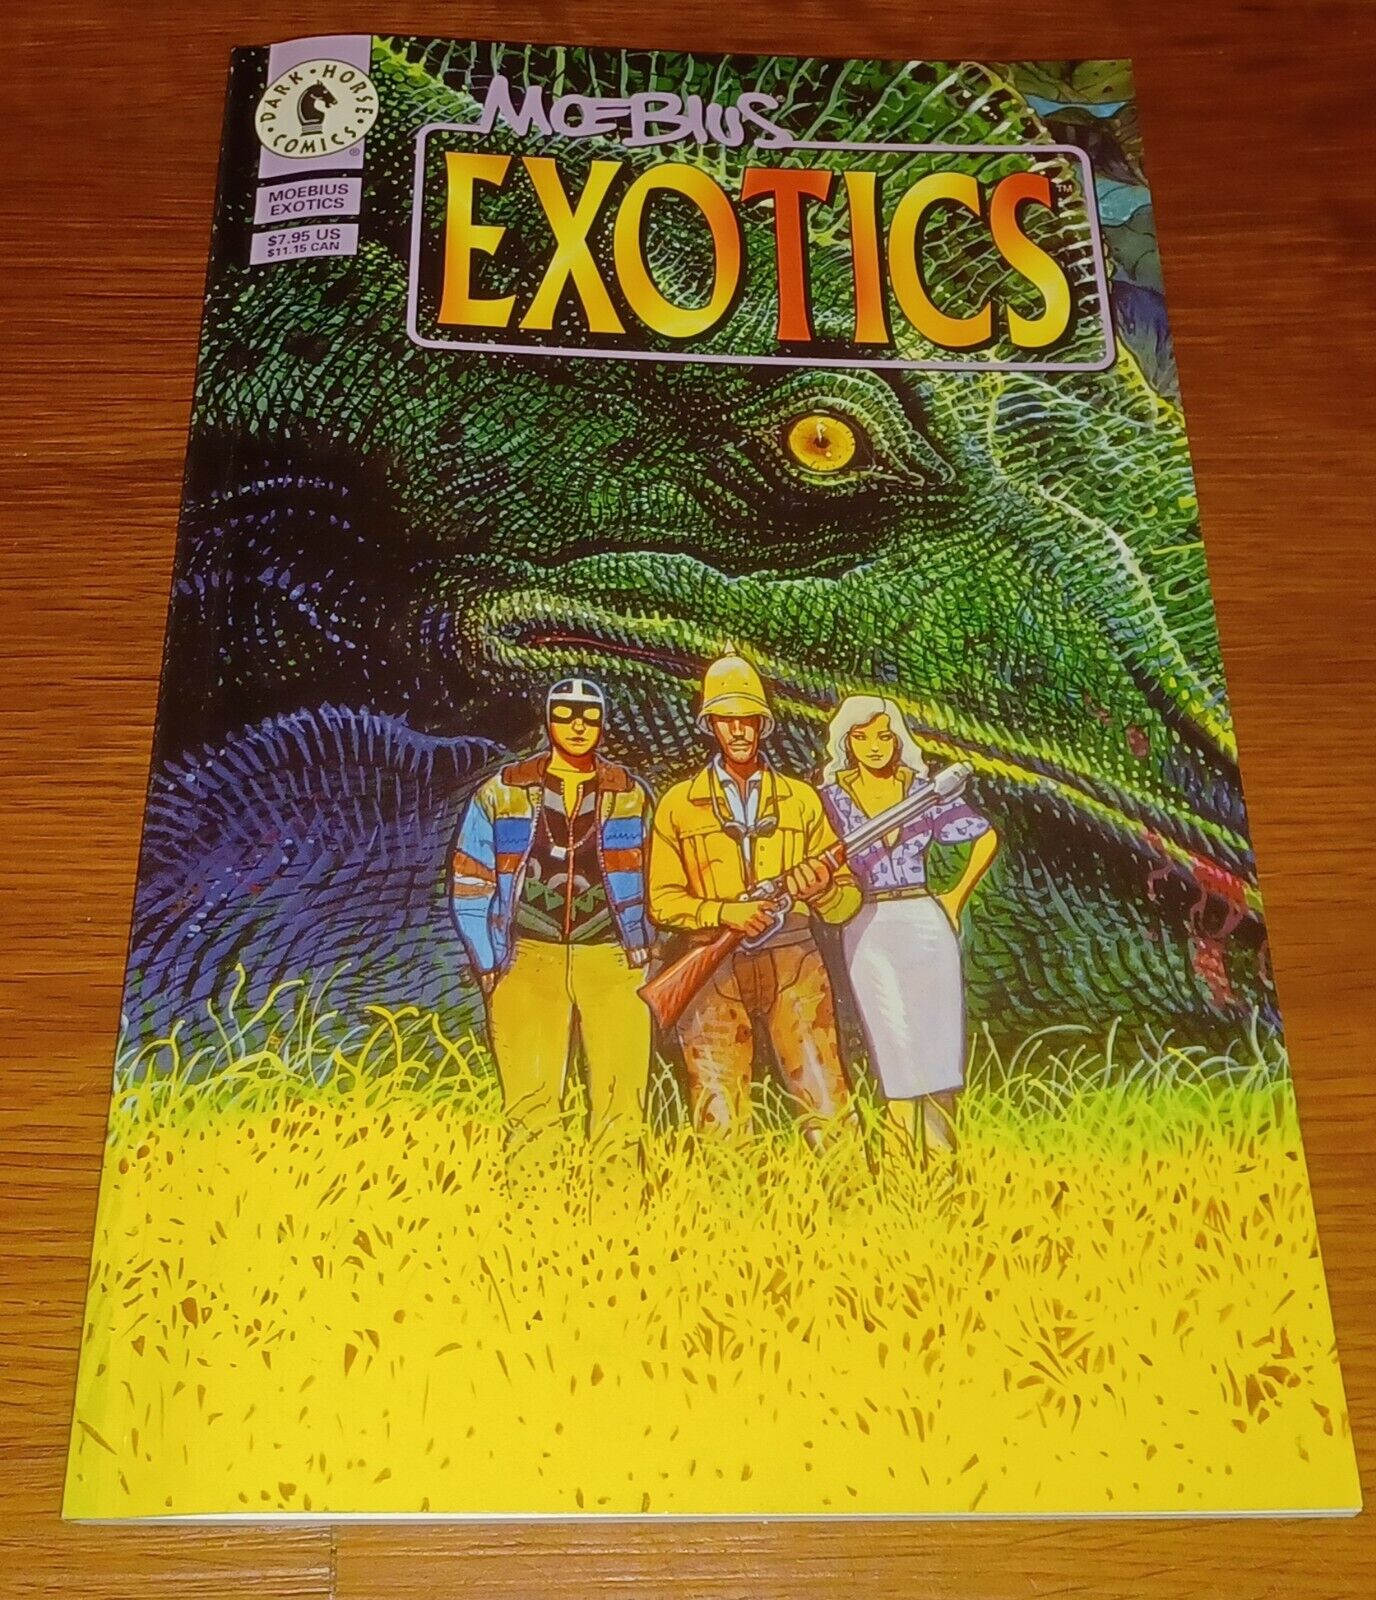 Moebius Exotics by Jean Mobius Giruad (1997, Trade Paperback) Dark Horse Comics